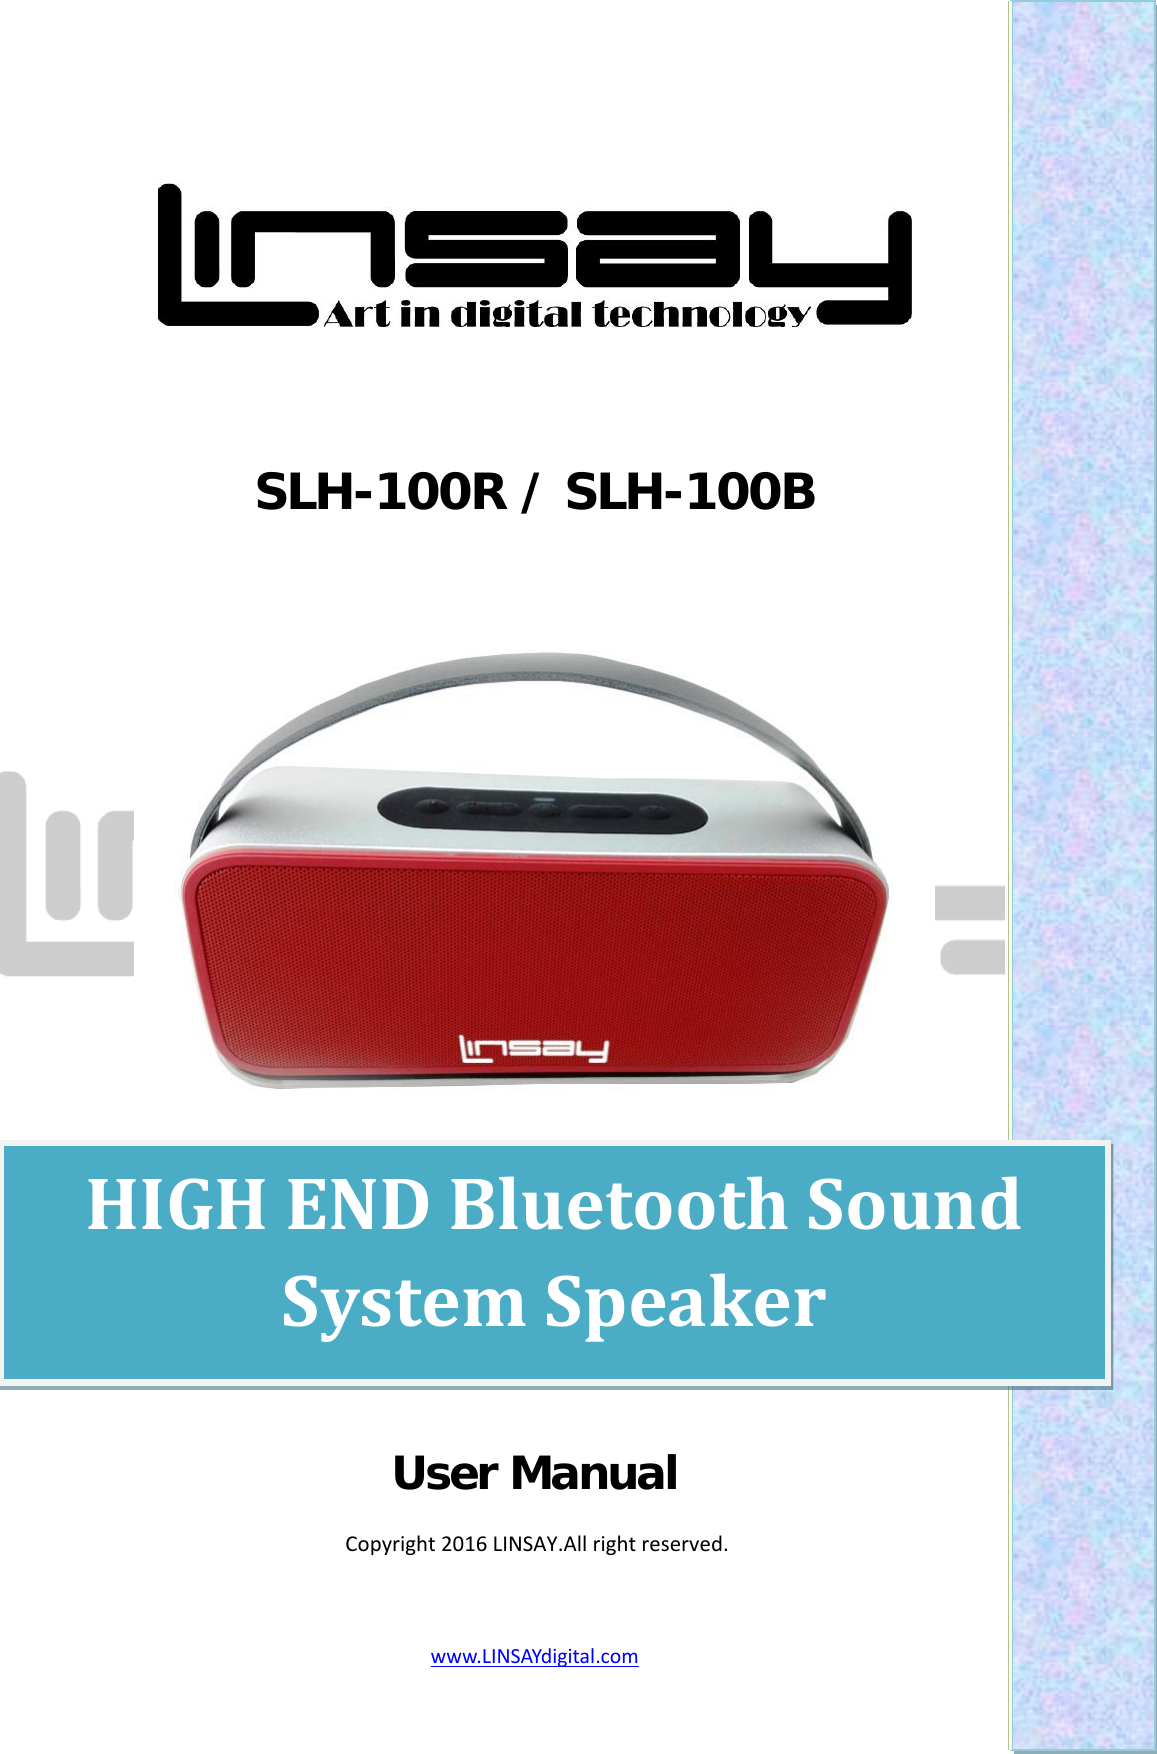  www.LINSAYdigital.com      SLH-100R / SLH-100B     User Manual  Copyright 2016 LINSAY.All right reserved.                                                               HIGH END Bluetooth Sound System Speaker  